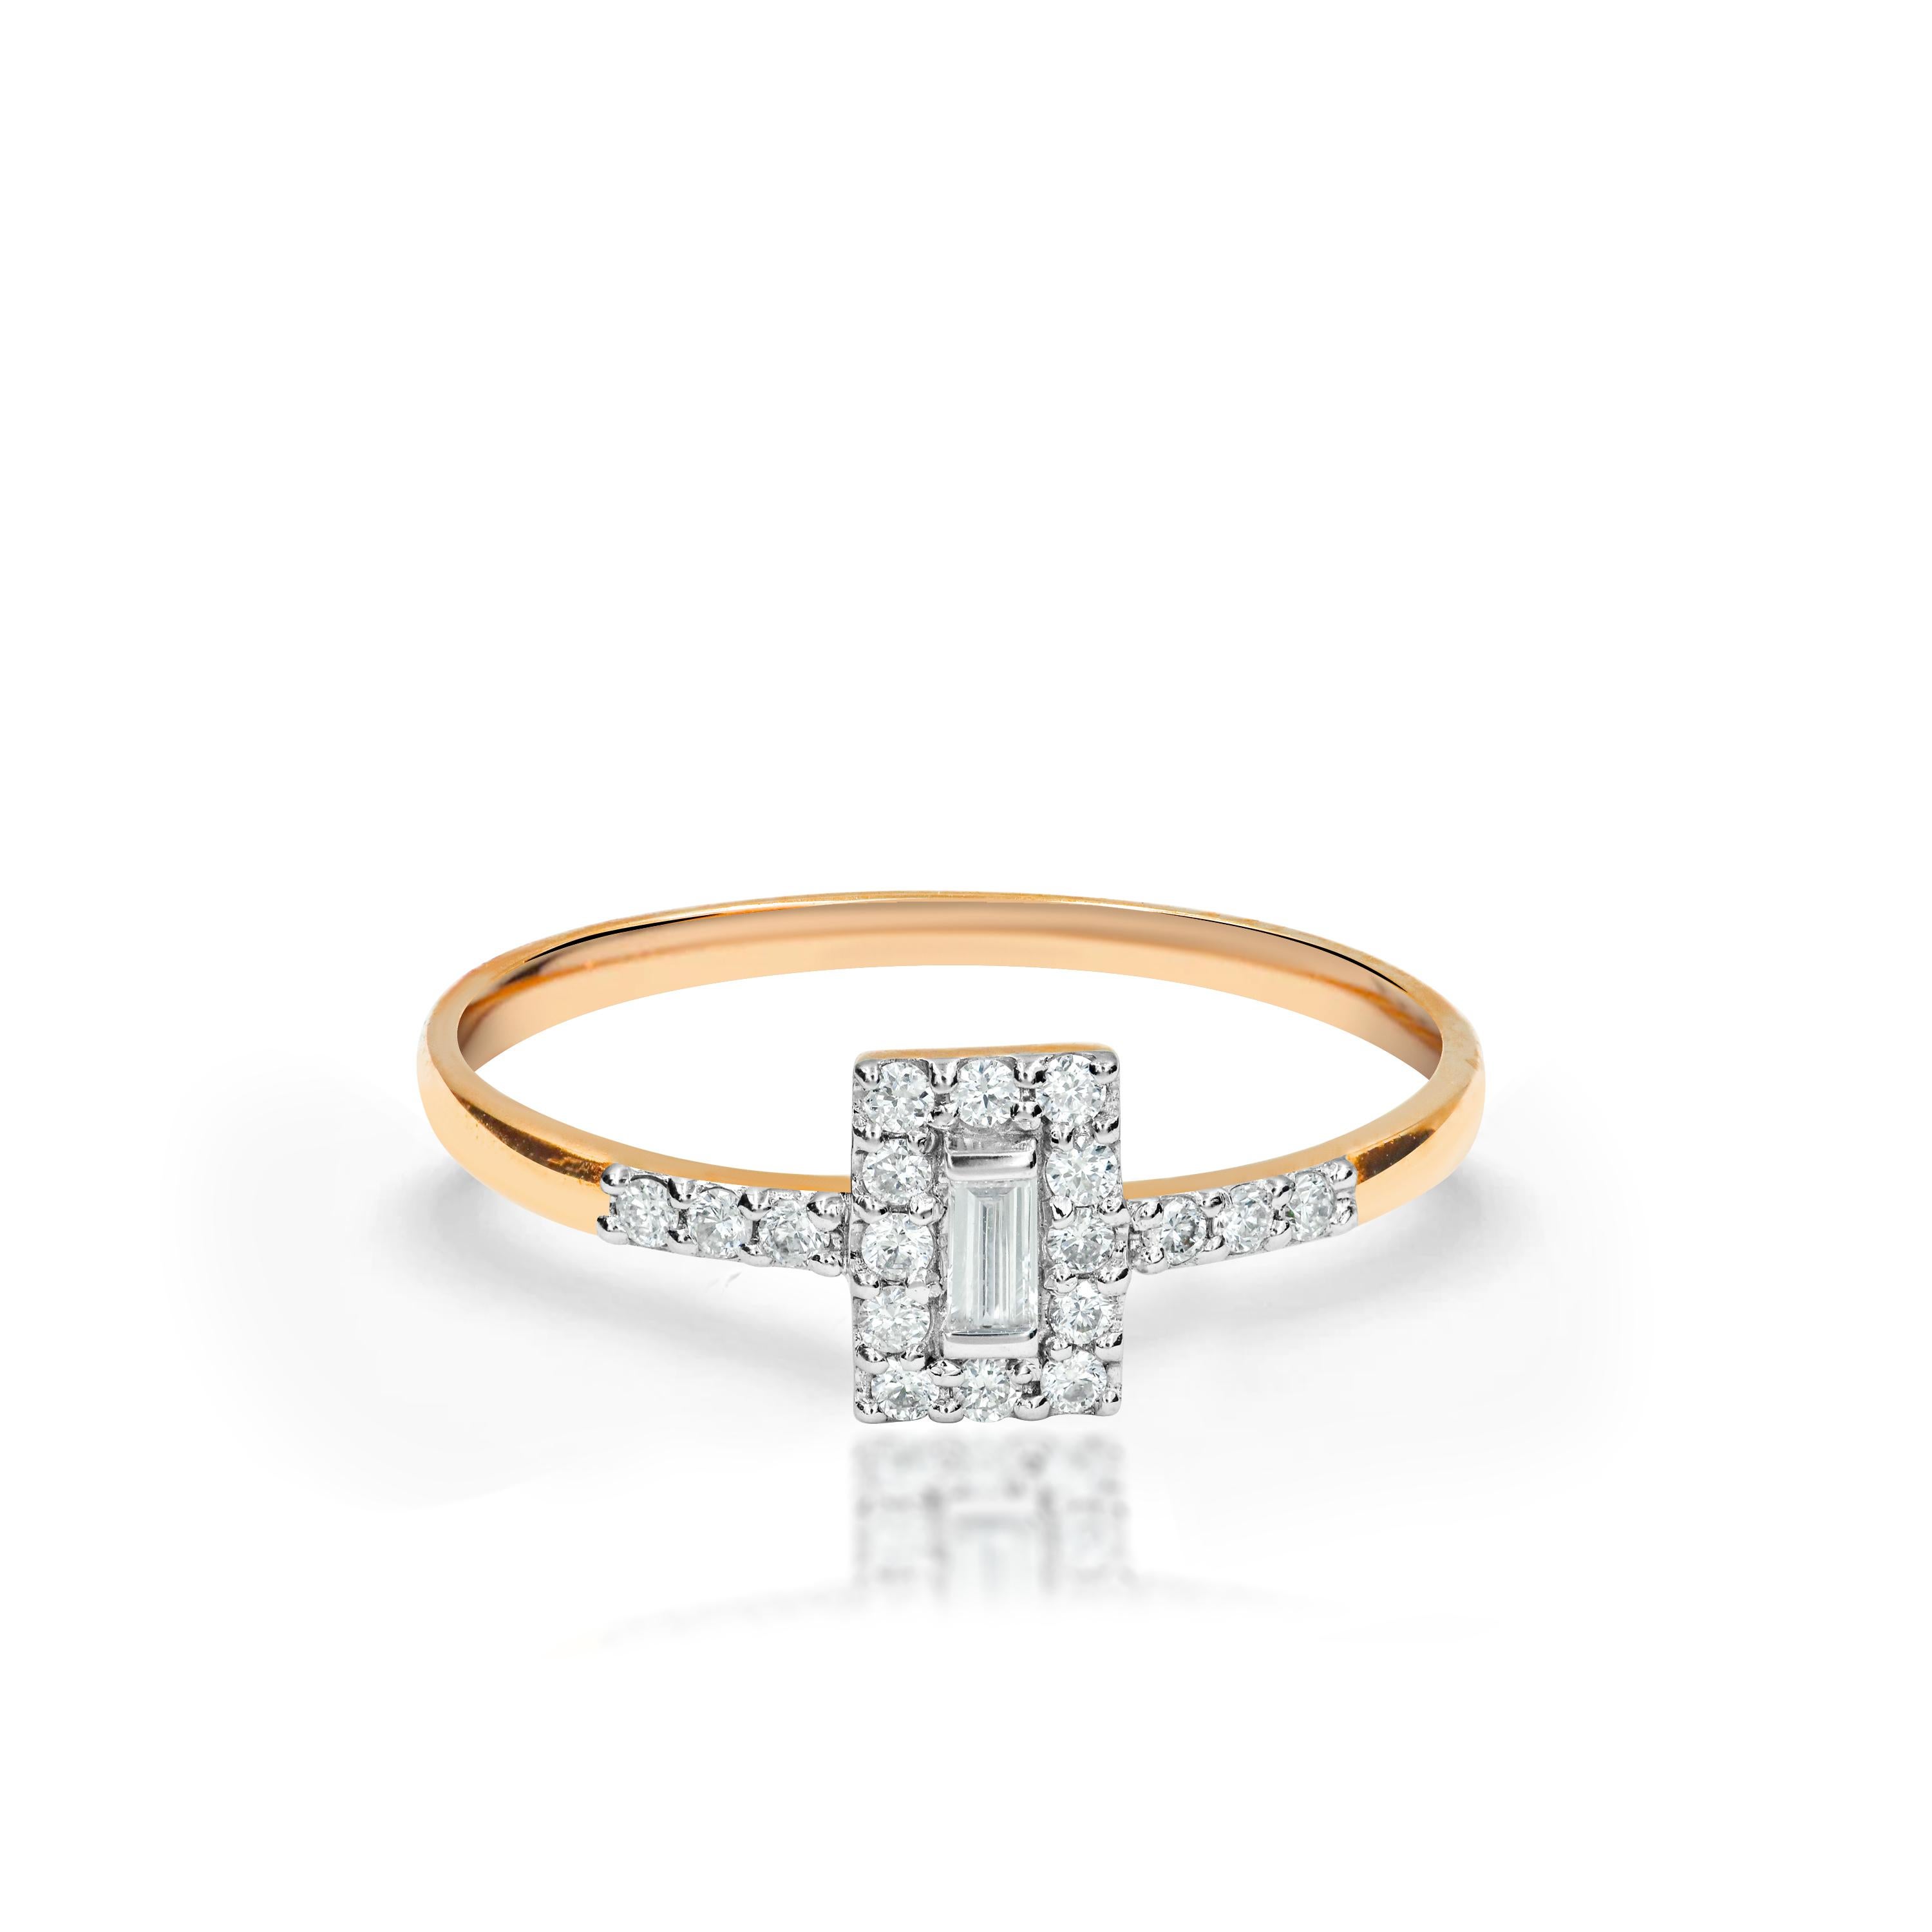 For Sale:  14k Gold Baguette Ring Diamond Baguette Ring Engagement Ring 2